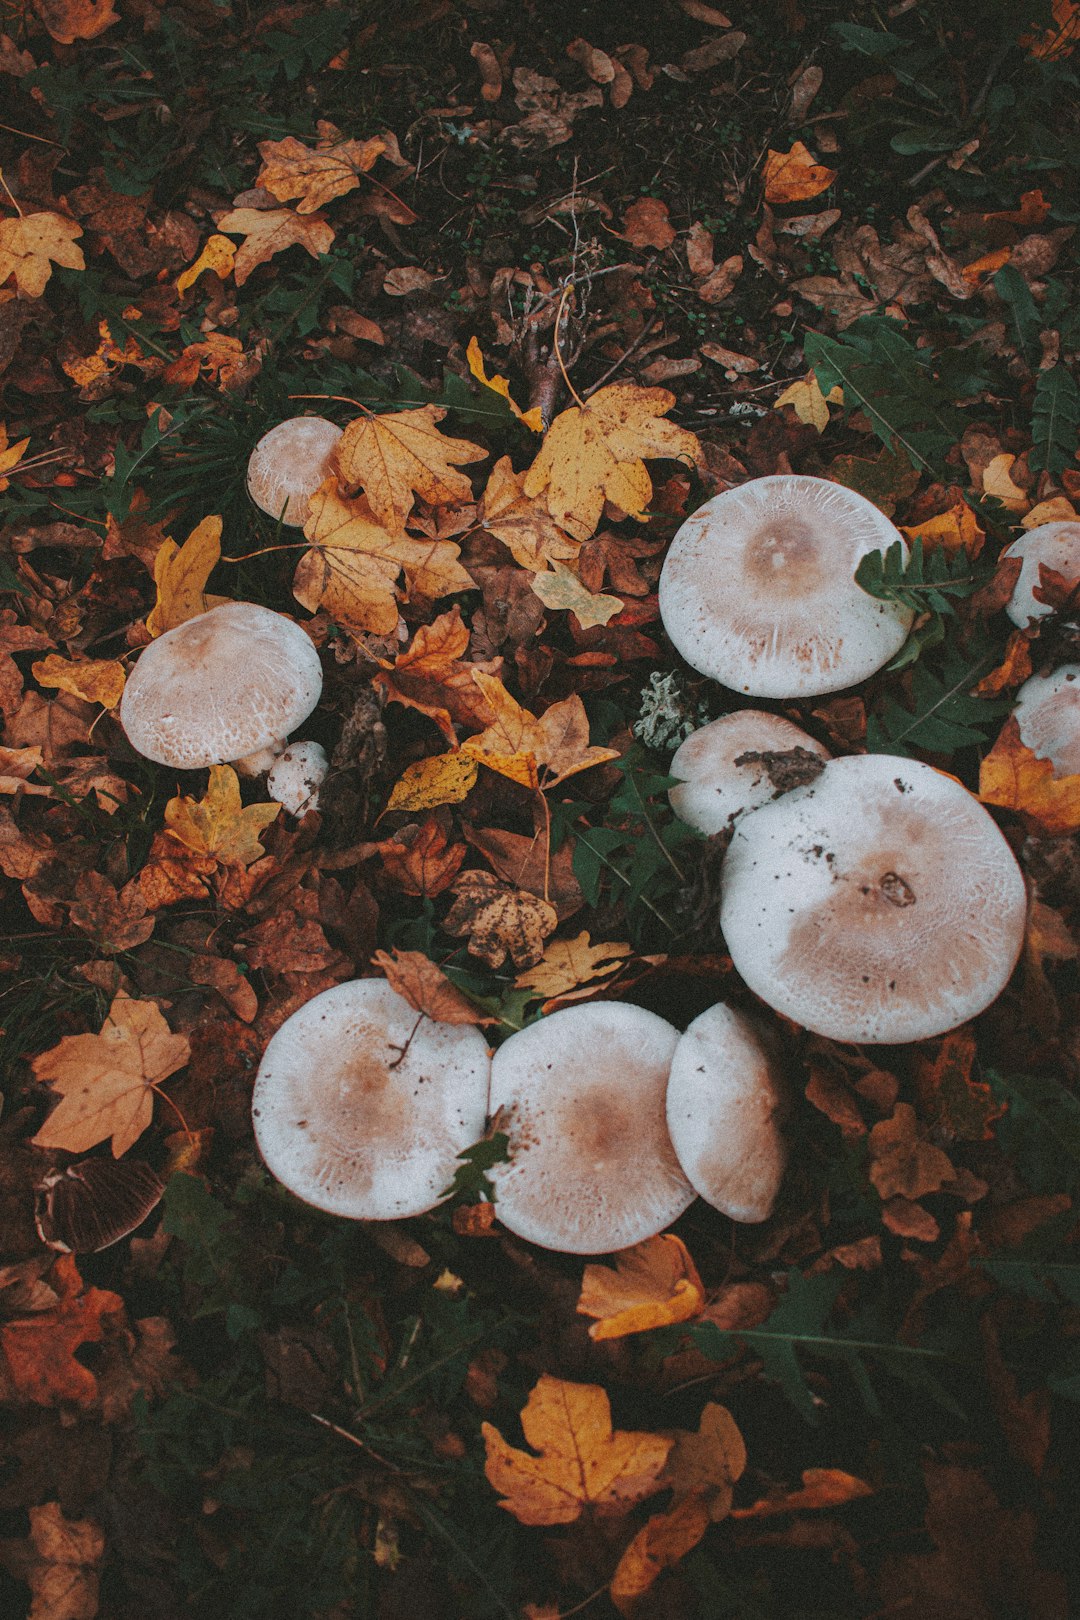 white mushrooms on brown dried leaves